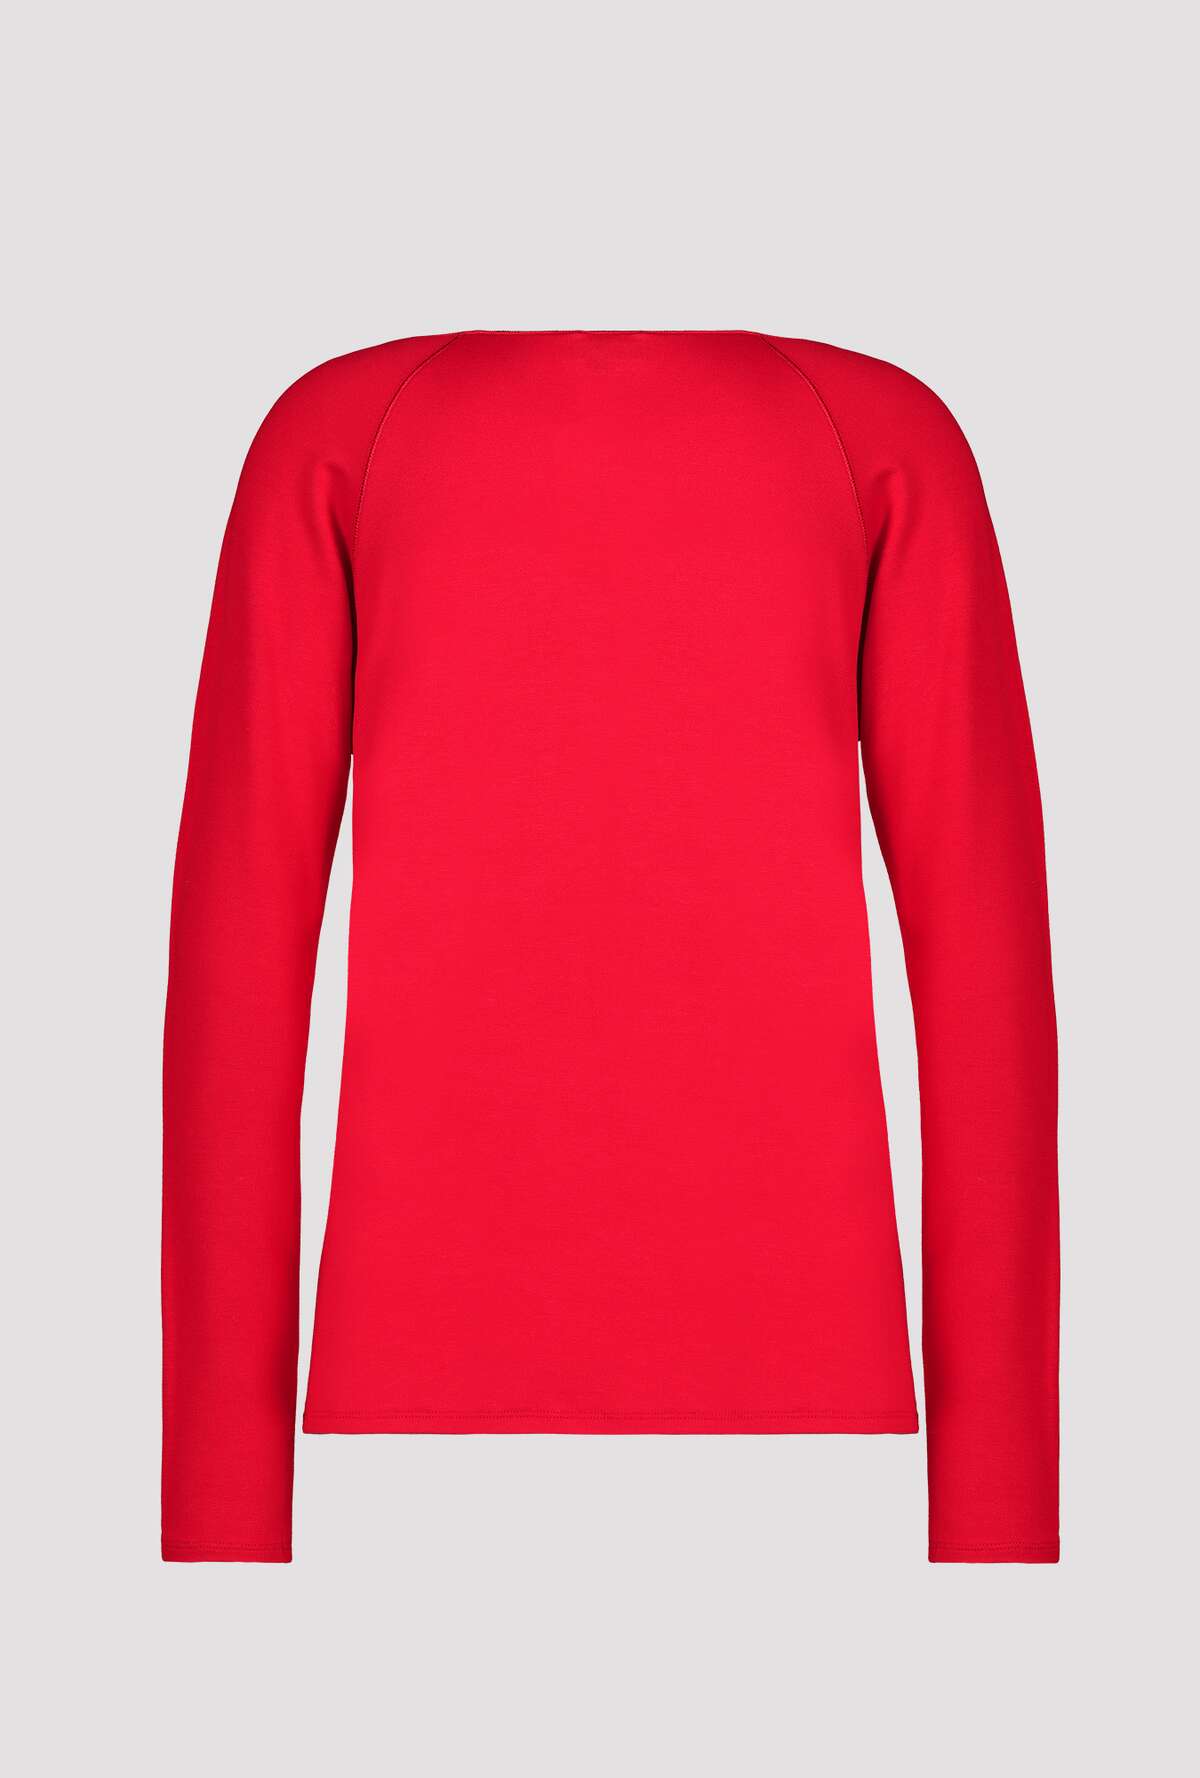 Monari Unifarbenes Langarm Jersey Shirt mit Rundhals | mode weber